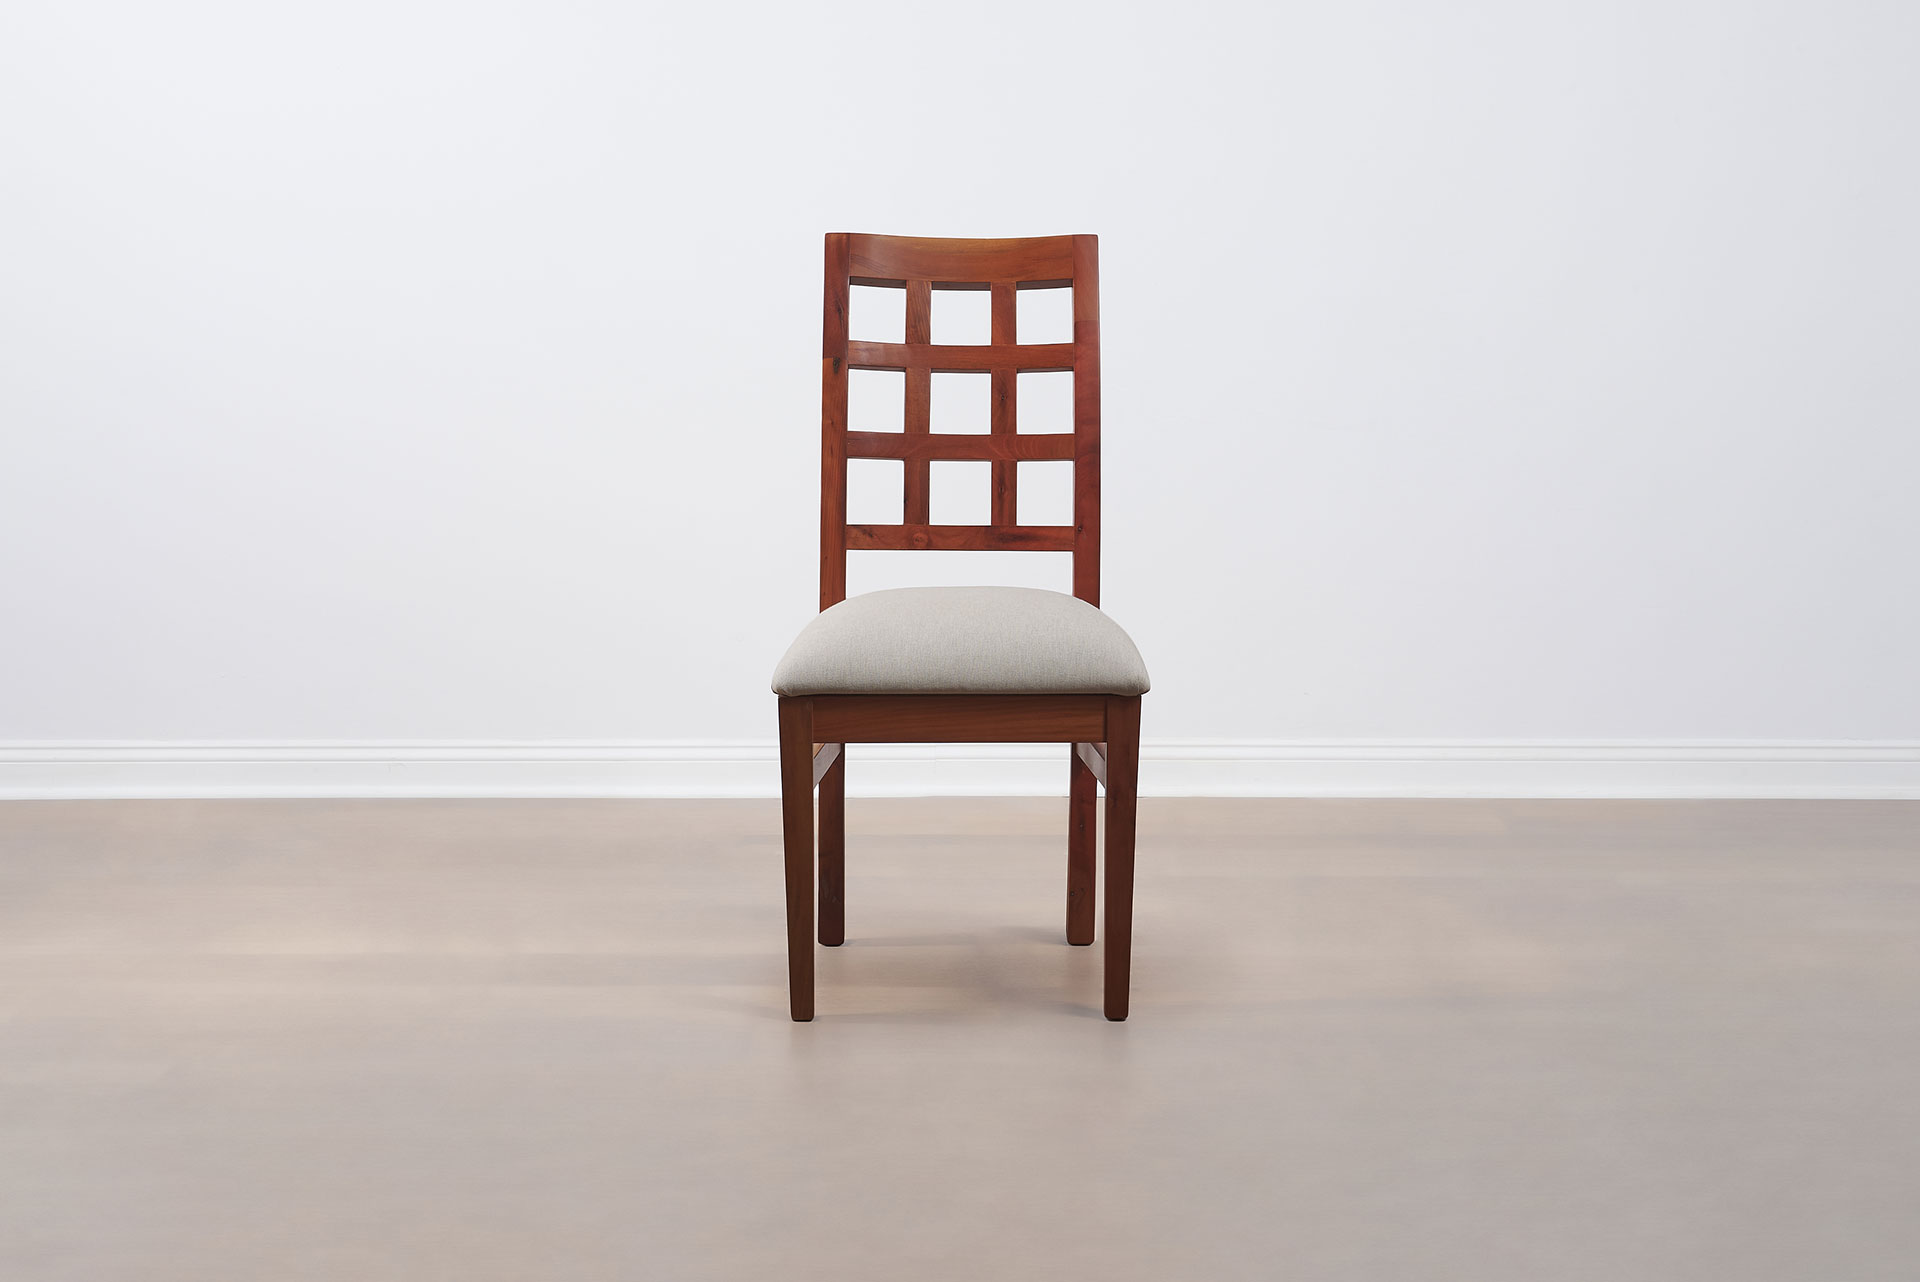 Muebles-Santander_Silla-Ventana_4610_silla_madera_textil